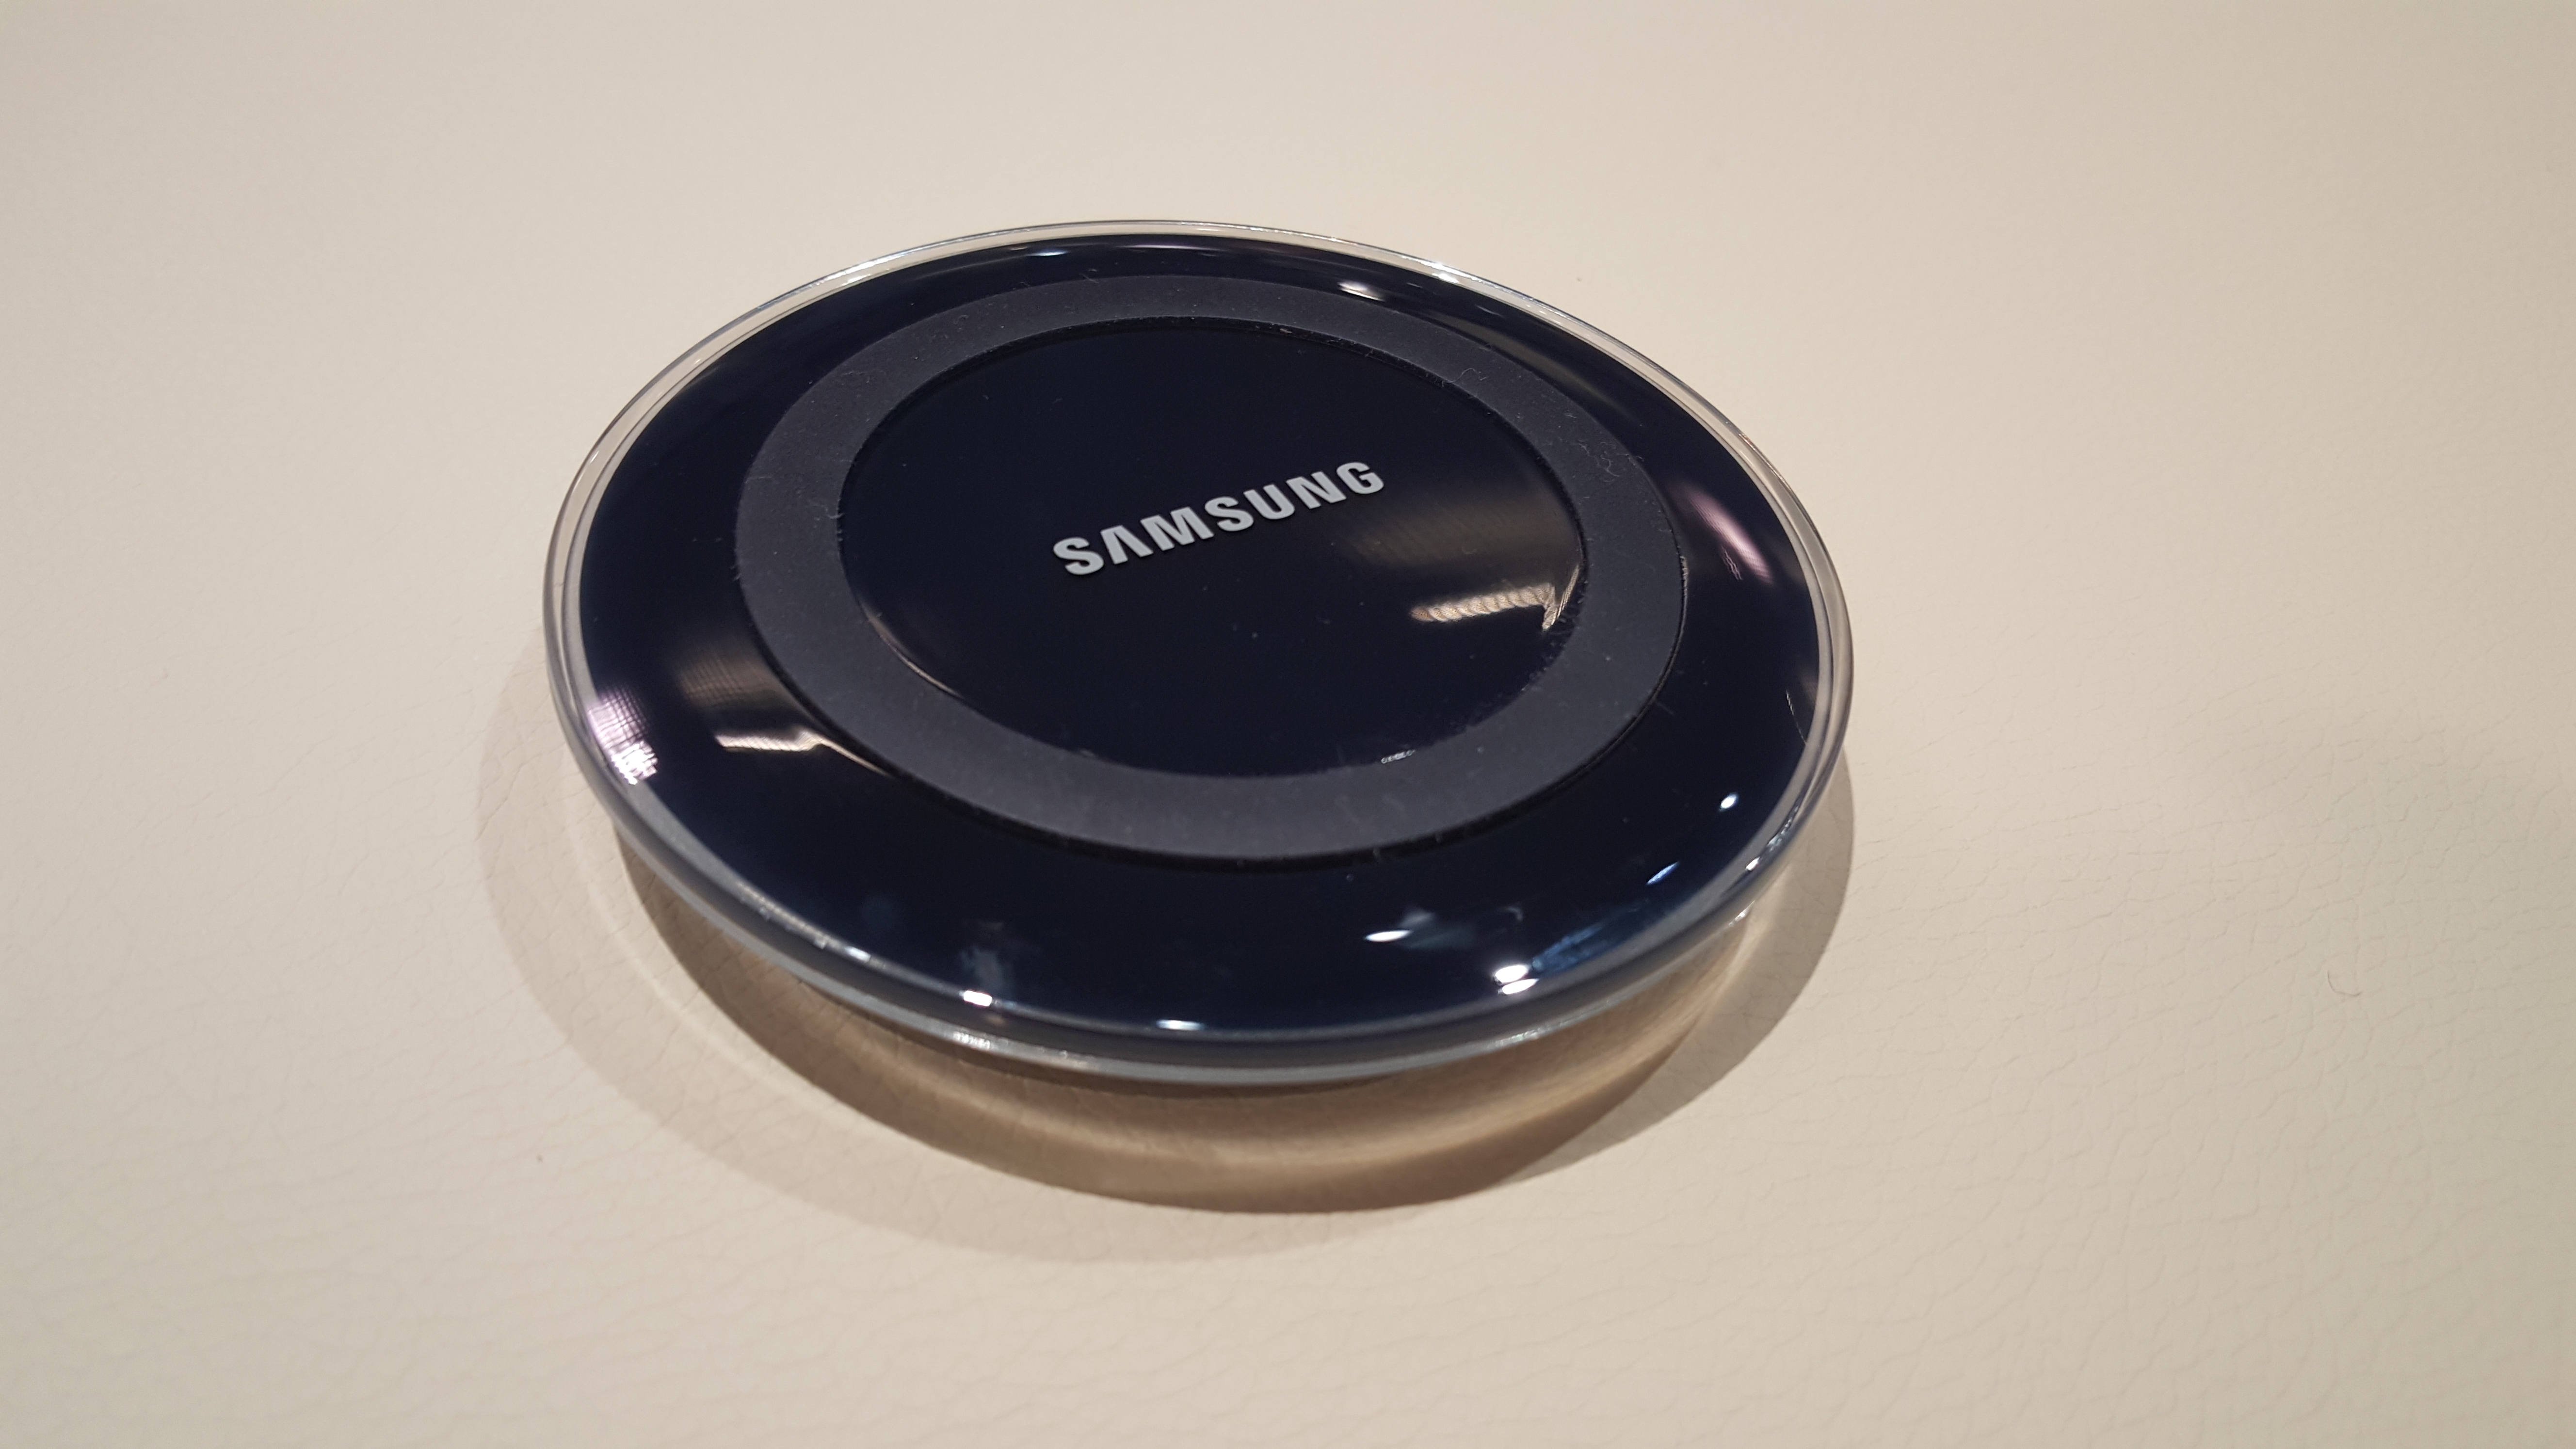 Samsung Galaxy S6 Edge poza camera MWC 2015 2